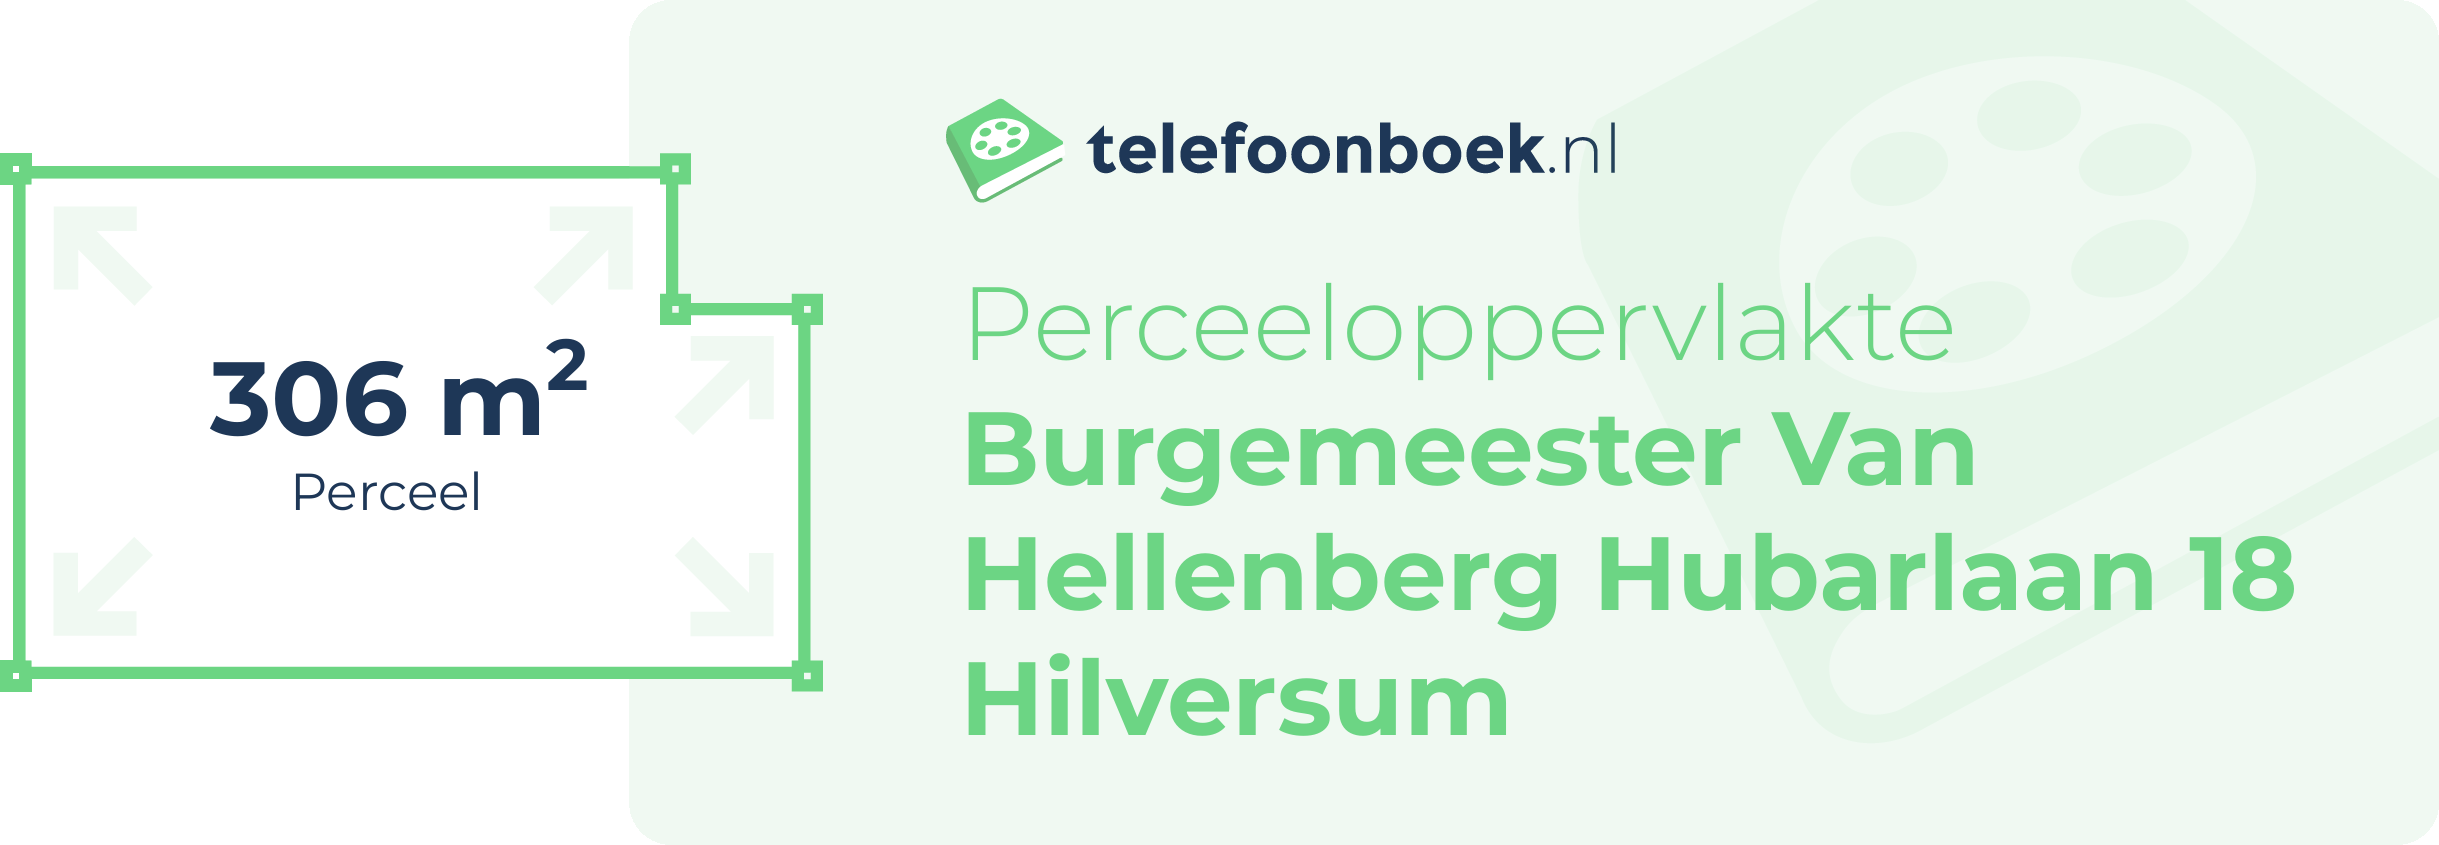 Perceeloppervlakte Burgemeester Van Hellenberg Hubarlaan 18 Hilversum